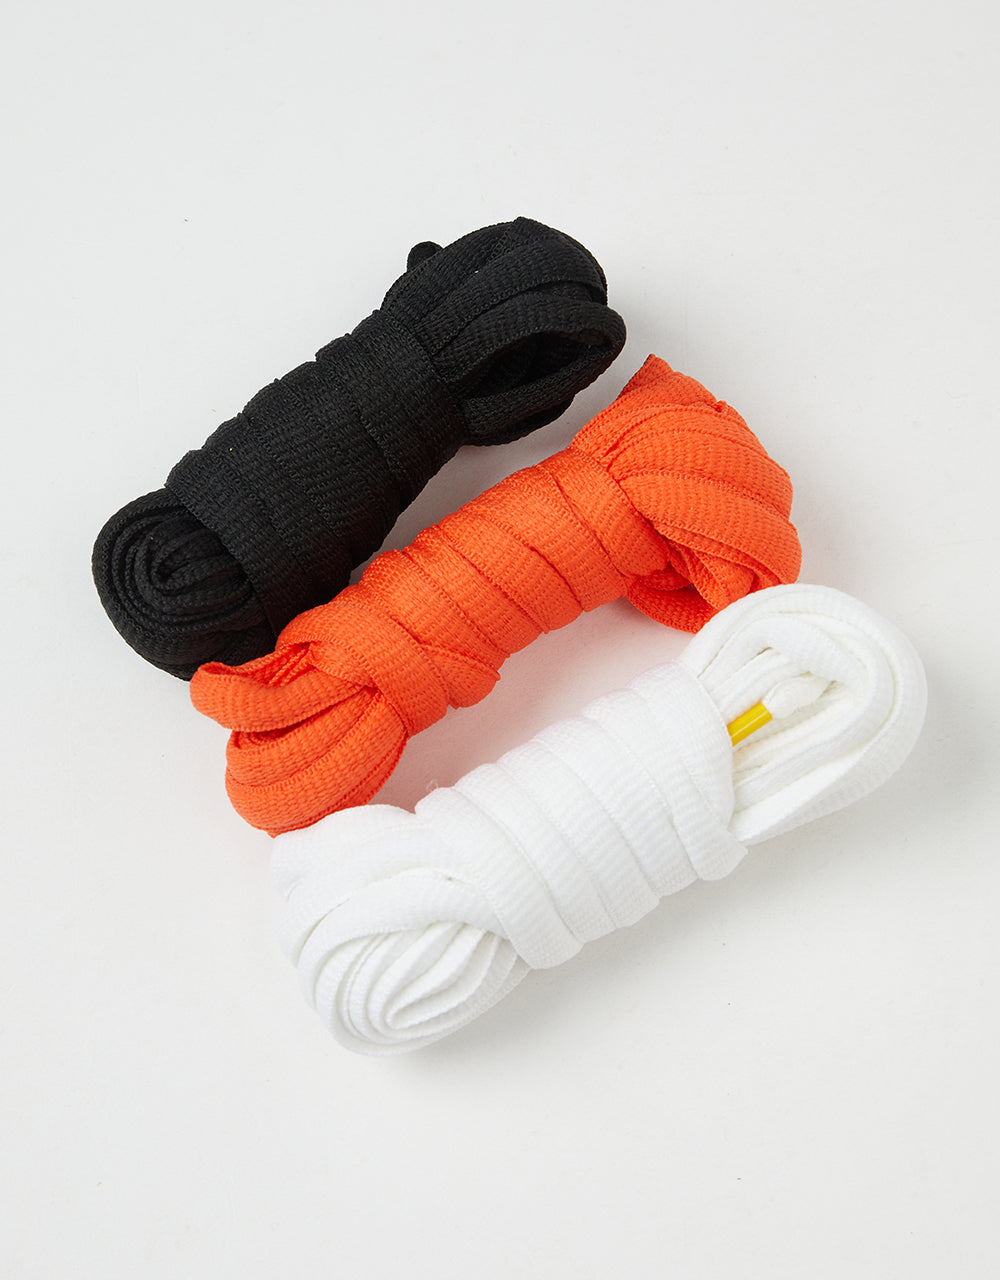 Nike SB 'Candy Corn' Dunk High Pro Skate Shoes - Amarillo/Orange-White-Black